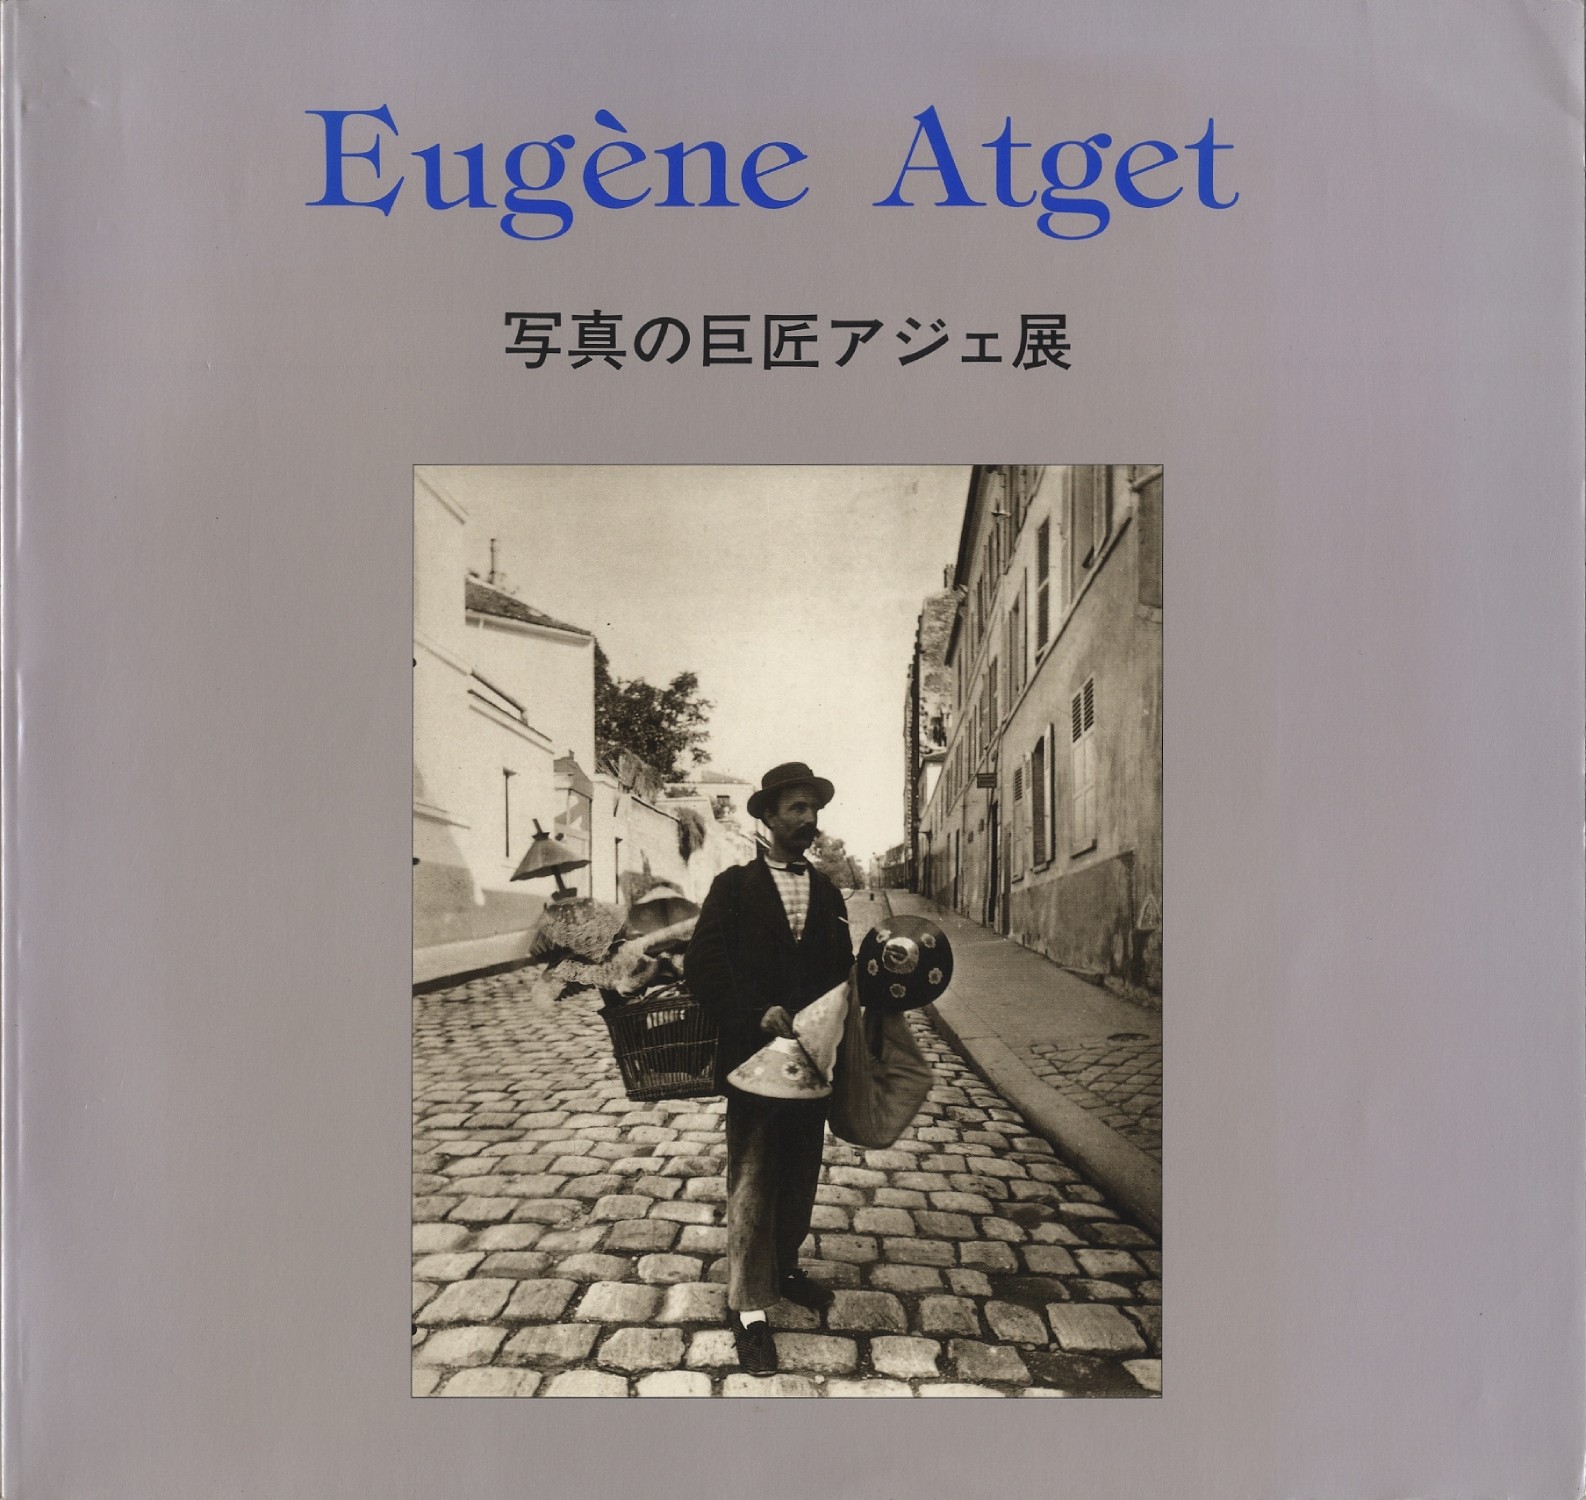 Eugène Atget 写真の巨匠 アジェ展　ユトリロ、藤田嗣治、マン・レイも魅せられた消えゆくパリの記録